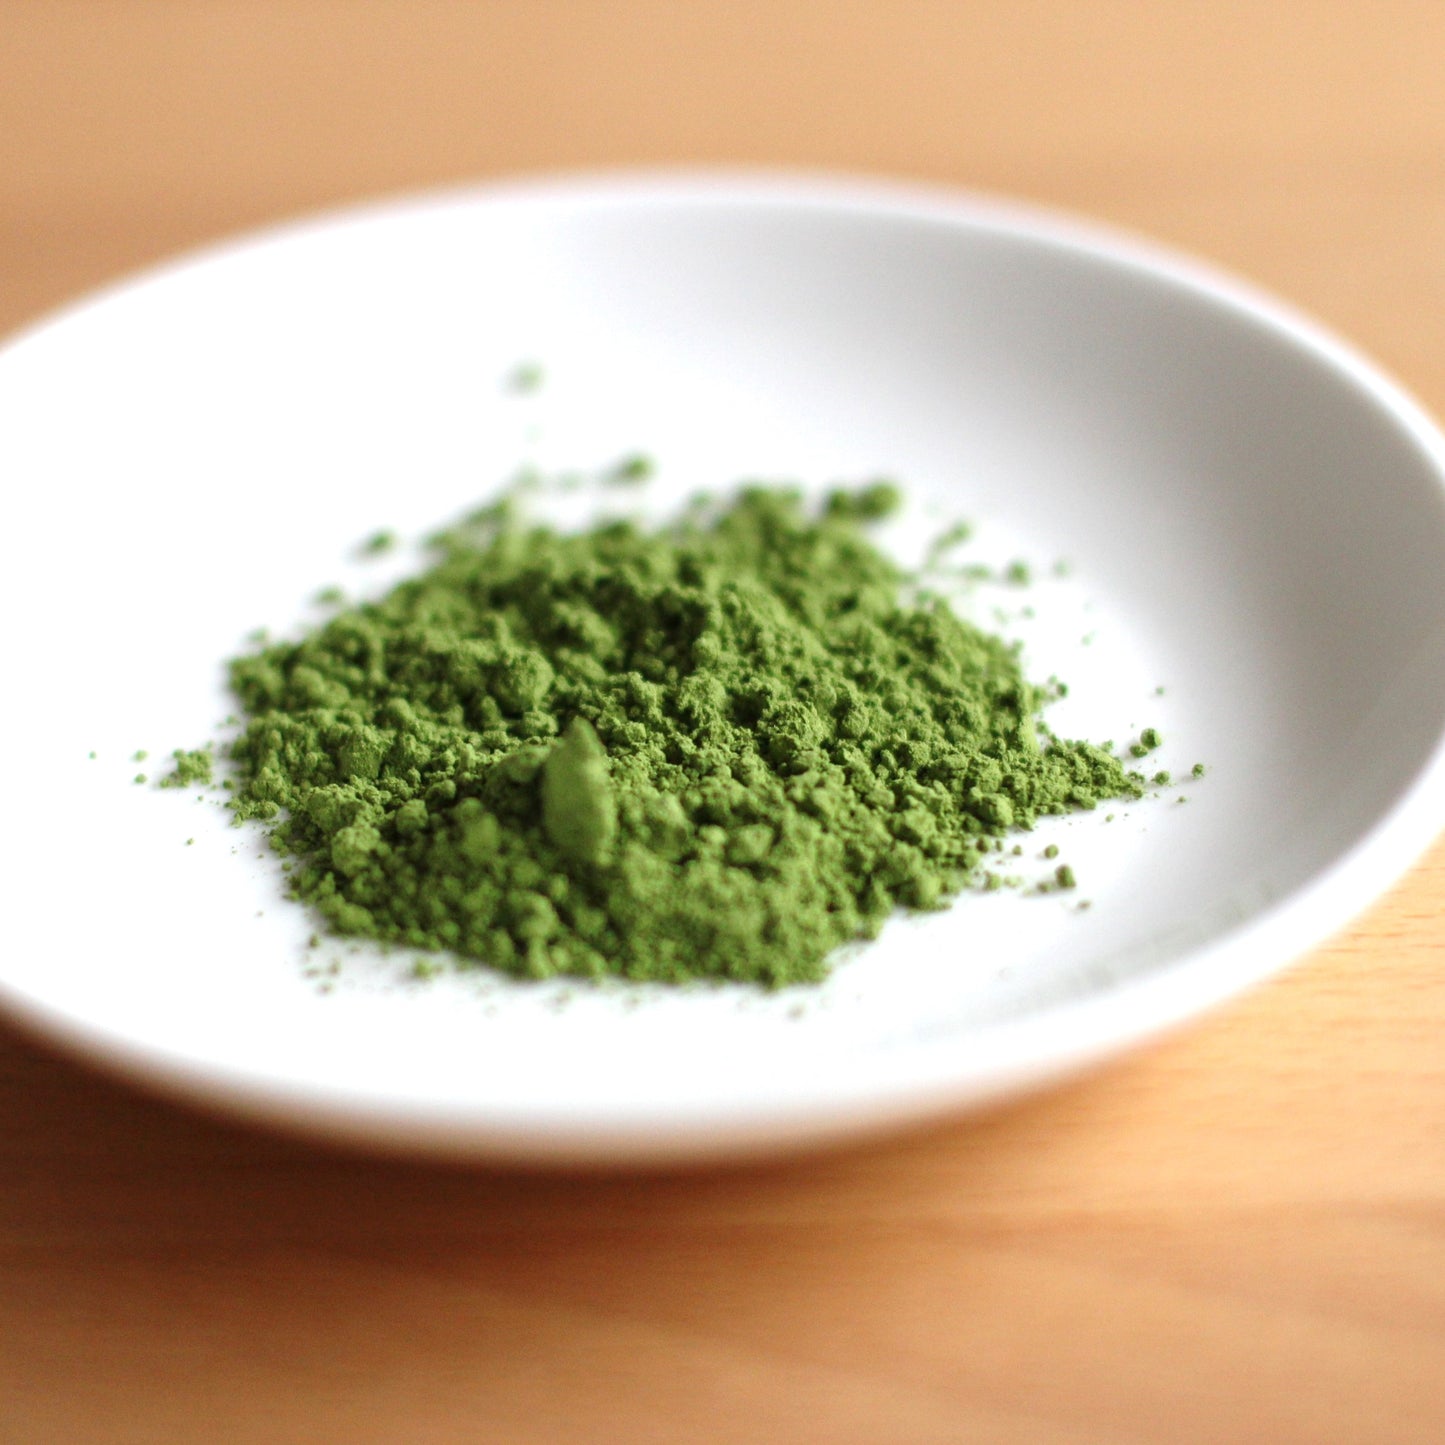 [Superior Grade] Organic Matcha green tea powder from Japan 1kg (2.2lbs) bag